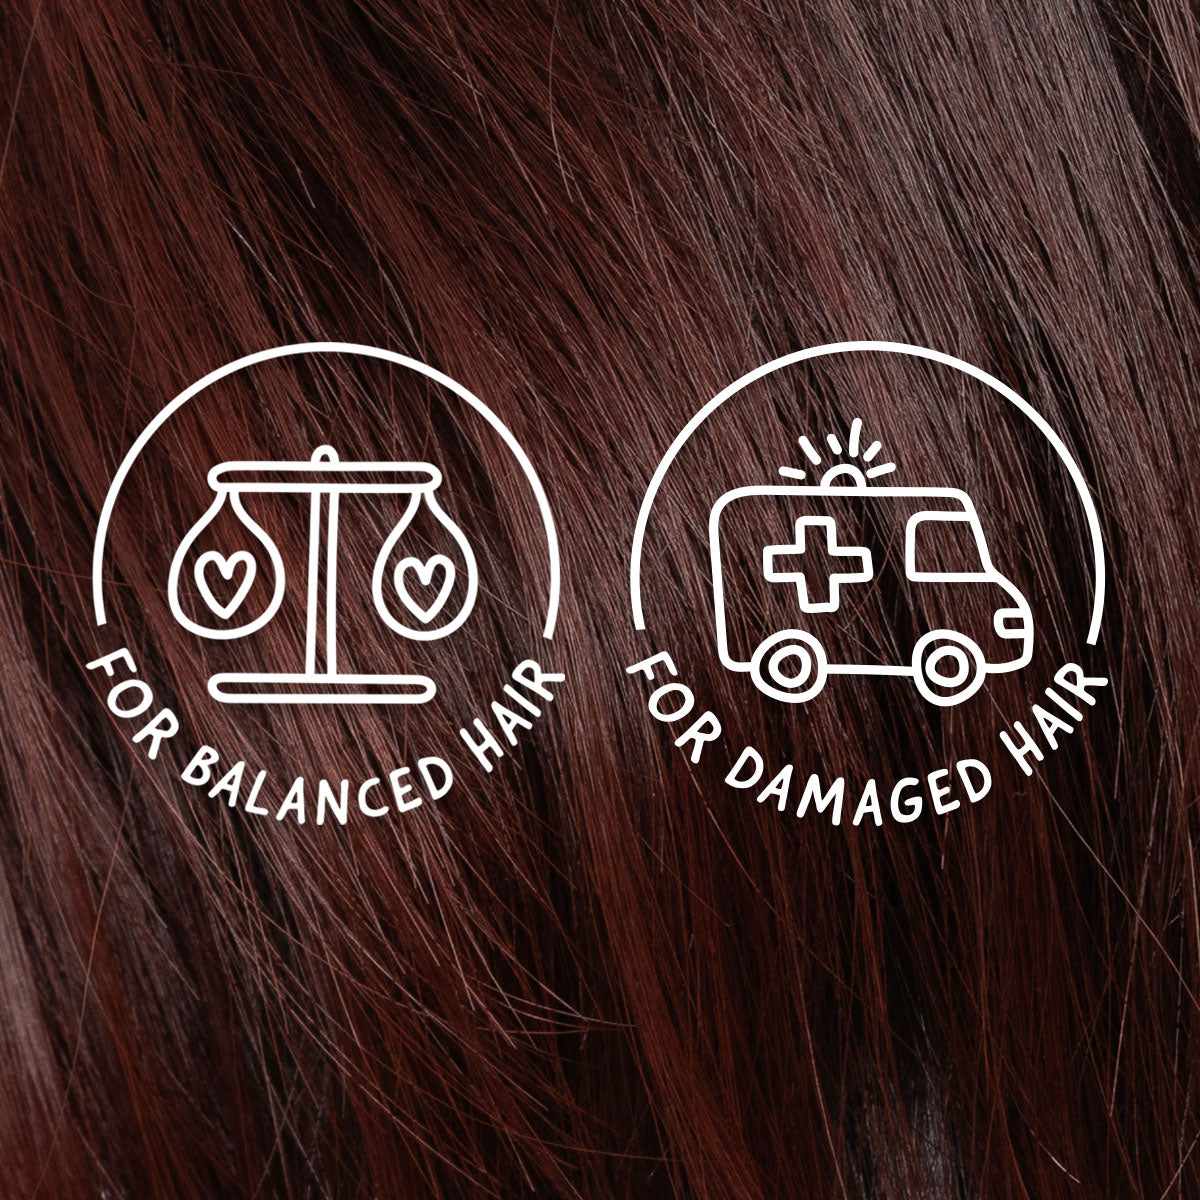 Restoring Shampoo Bar Mini for Dry, Damaged Hair: Sorbet™